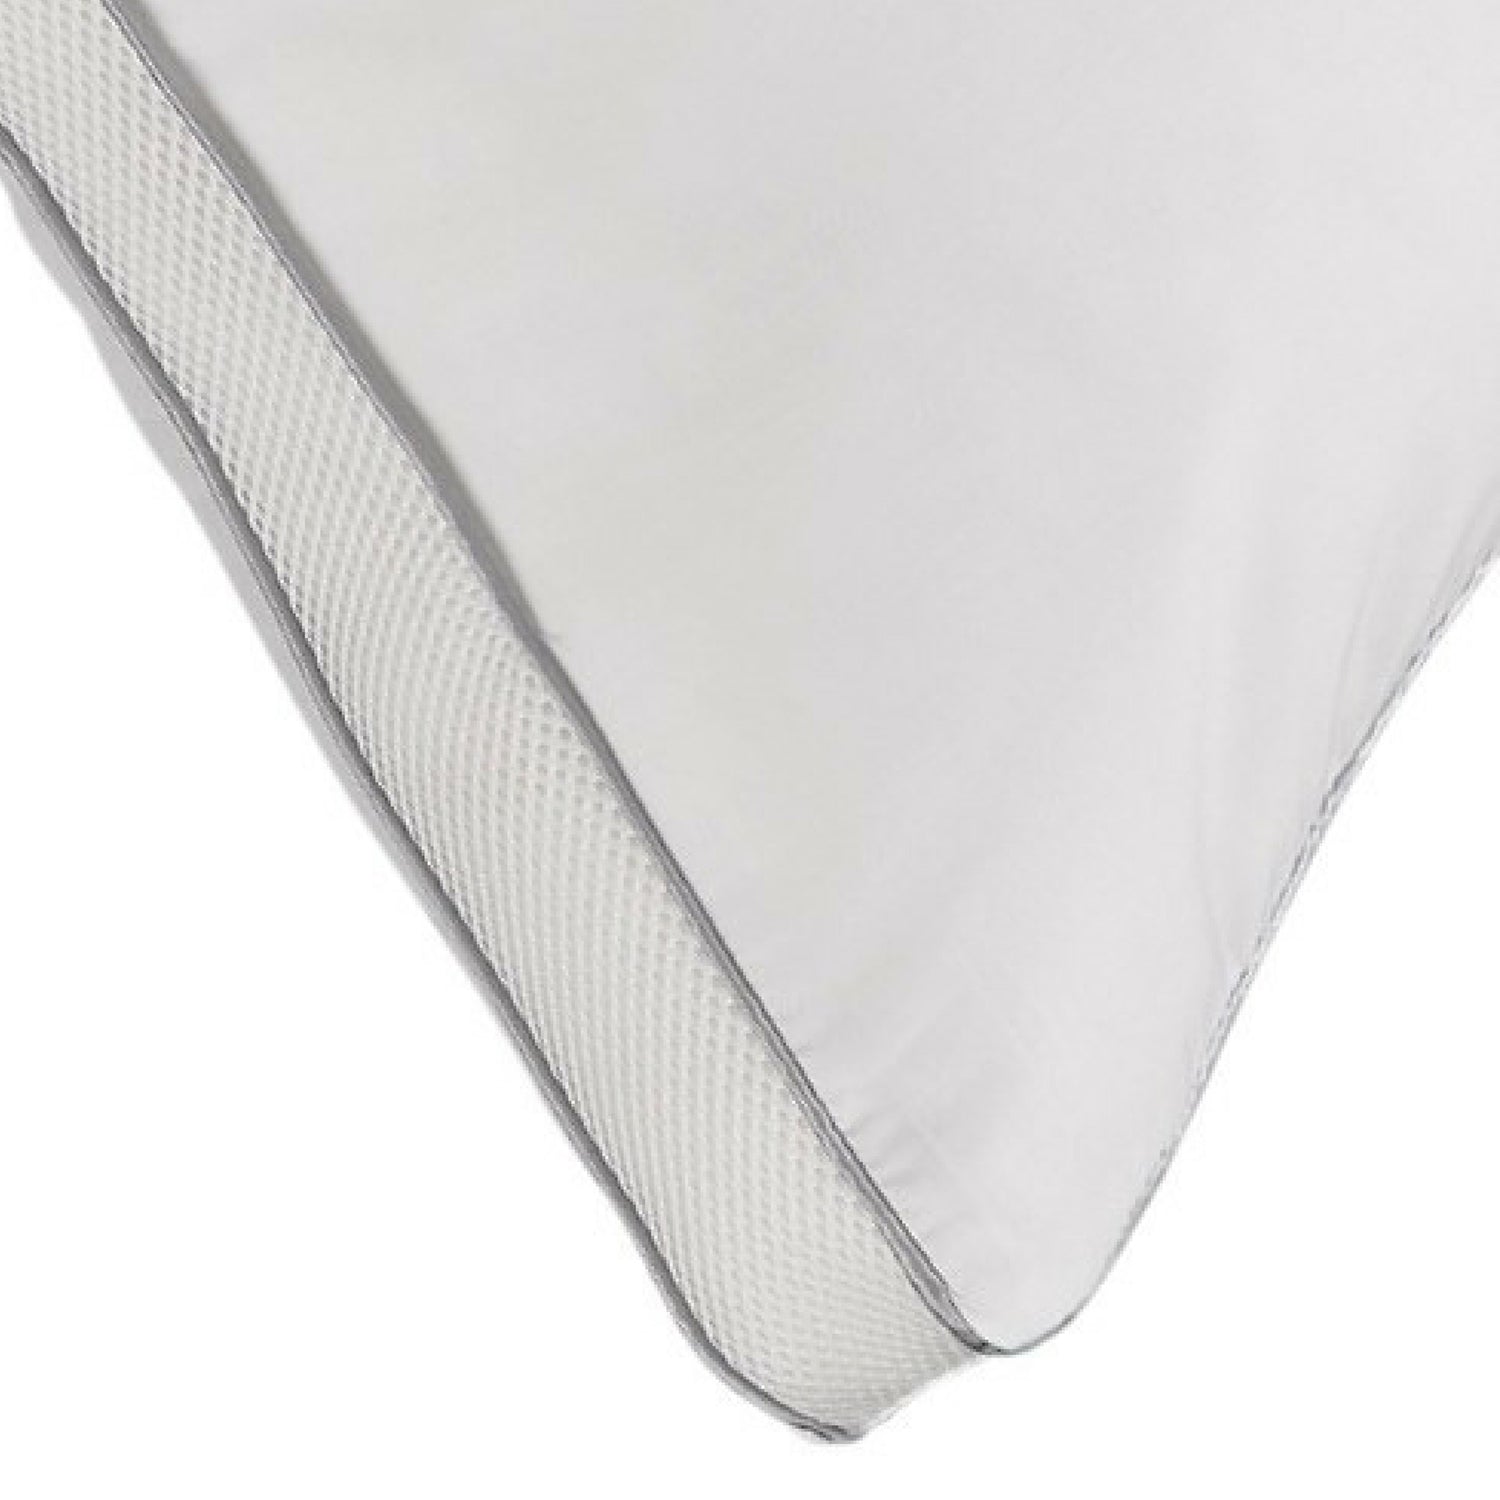 Soft Plush 100% Cotton Mesh Gusseted Down Alternative Stomach Sleeper Pillow